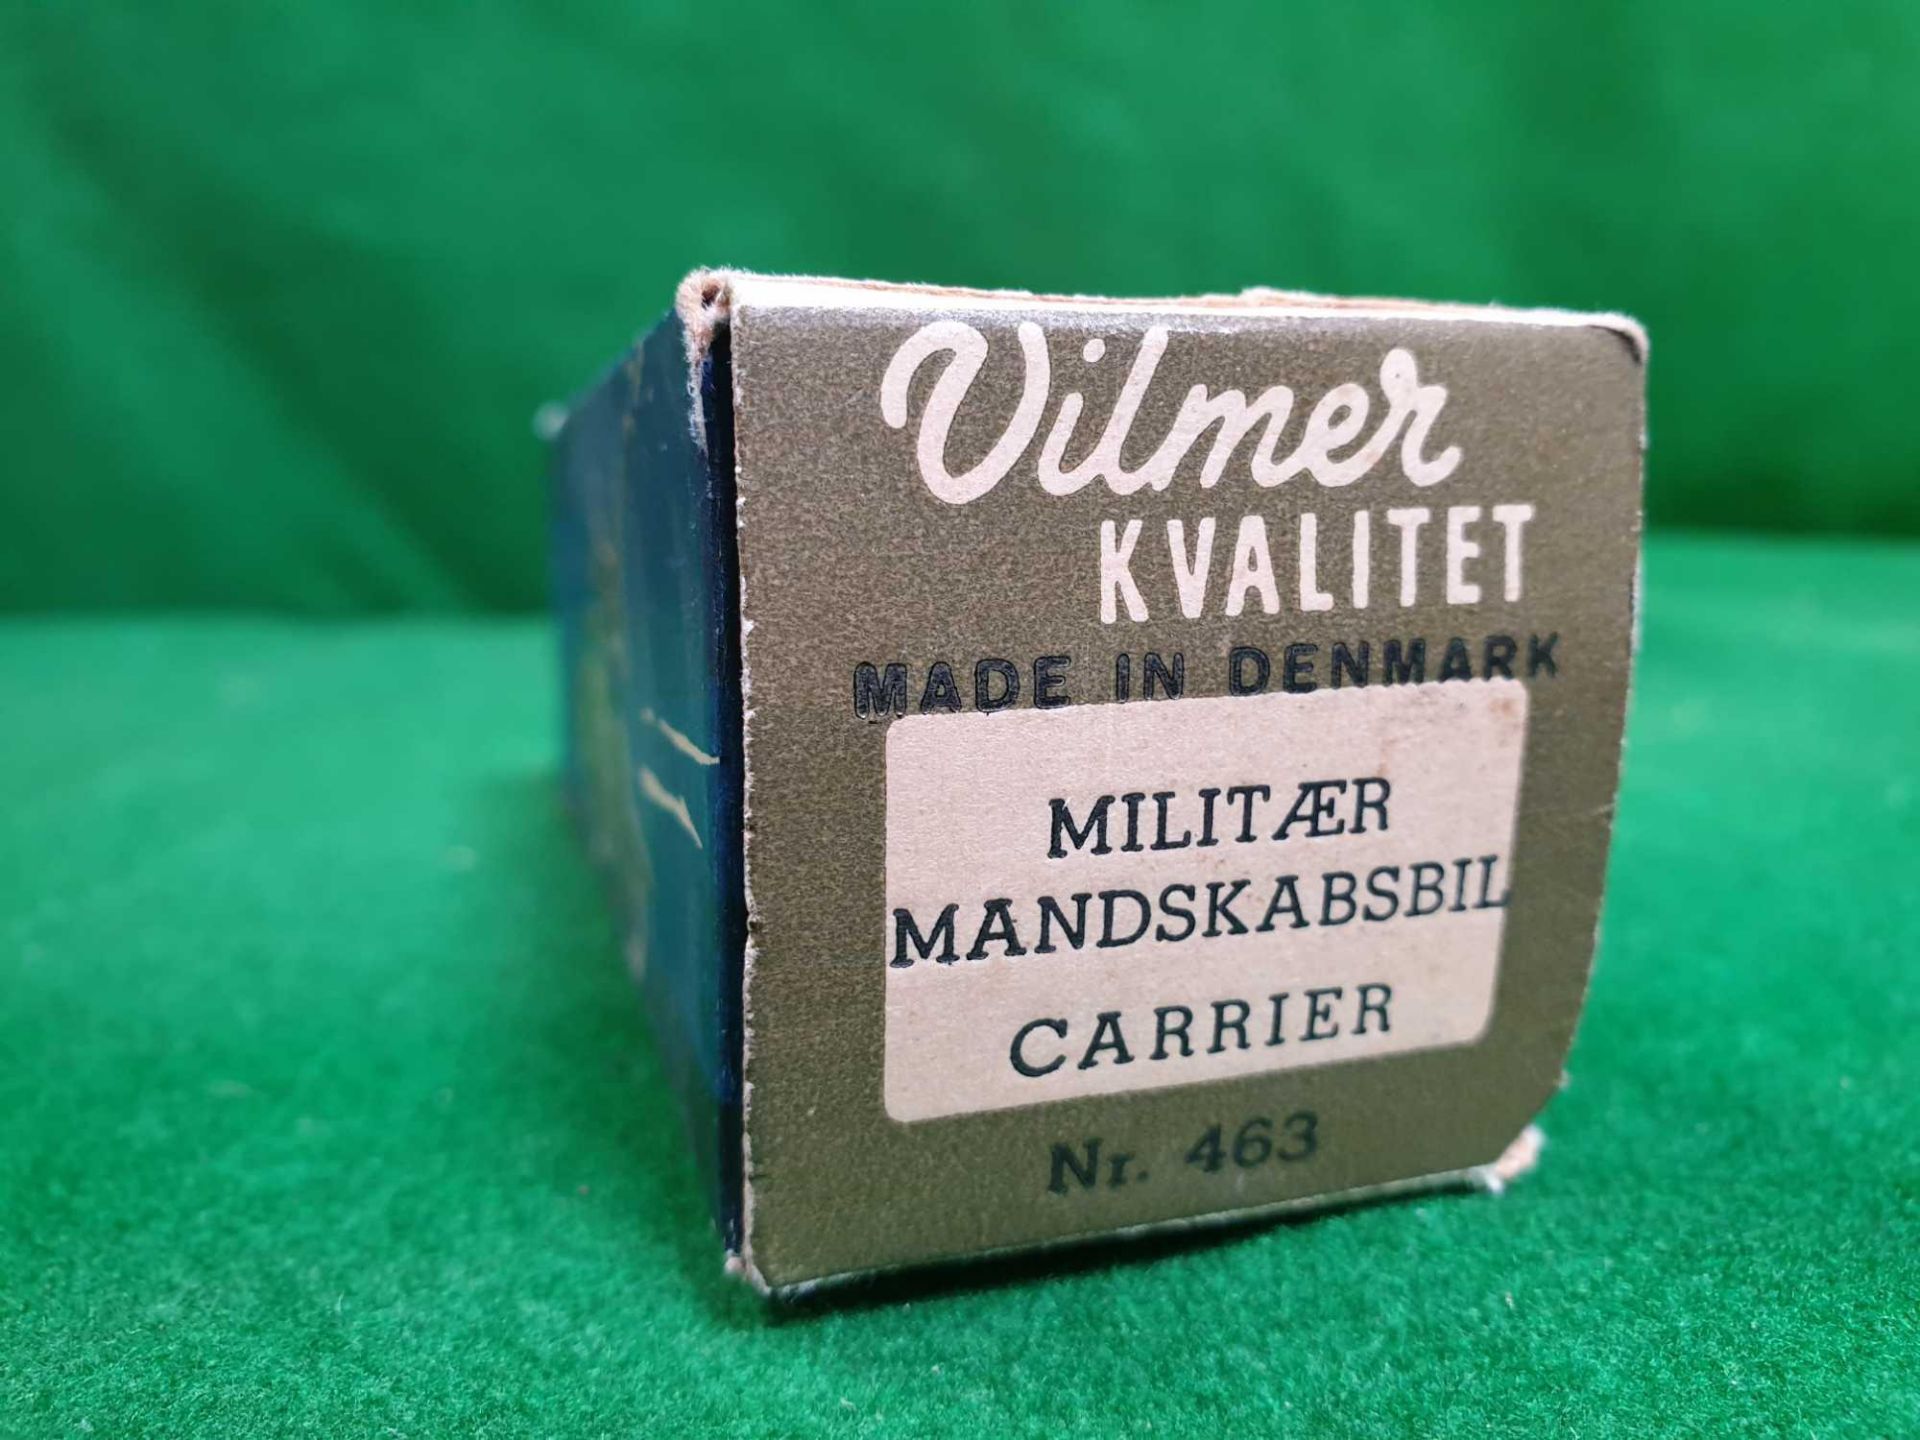 Vilmer Kvalitet (Denmark) #463 Green Military Army Gun Truck Quite Rare Box Has One Tab Missing - Image 6 of 6